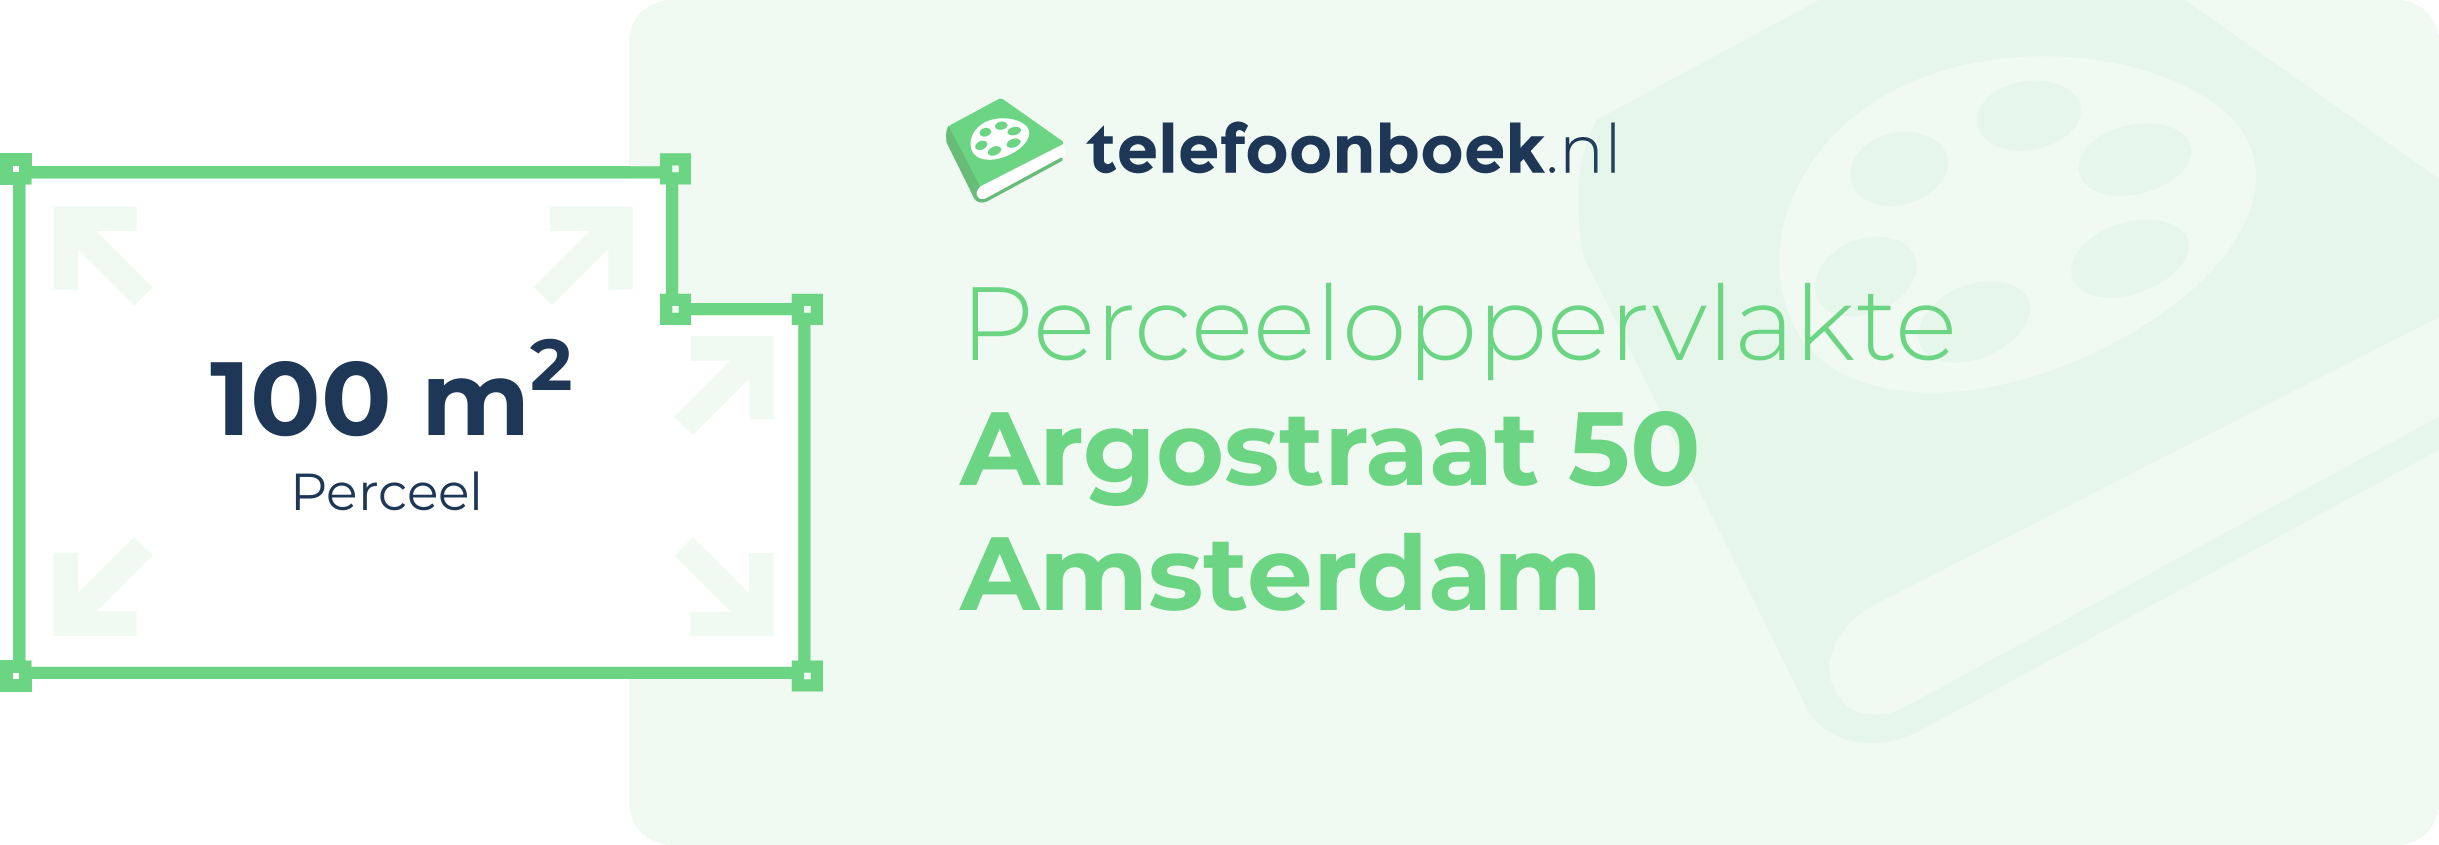 Perceeloppervlakte Argostraat 50 Amsterdam